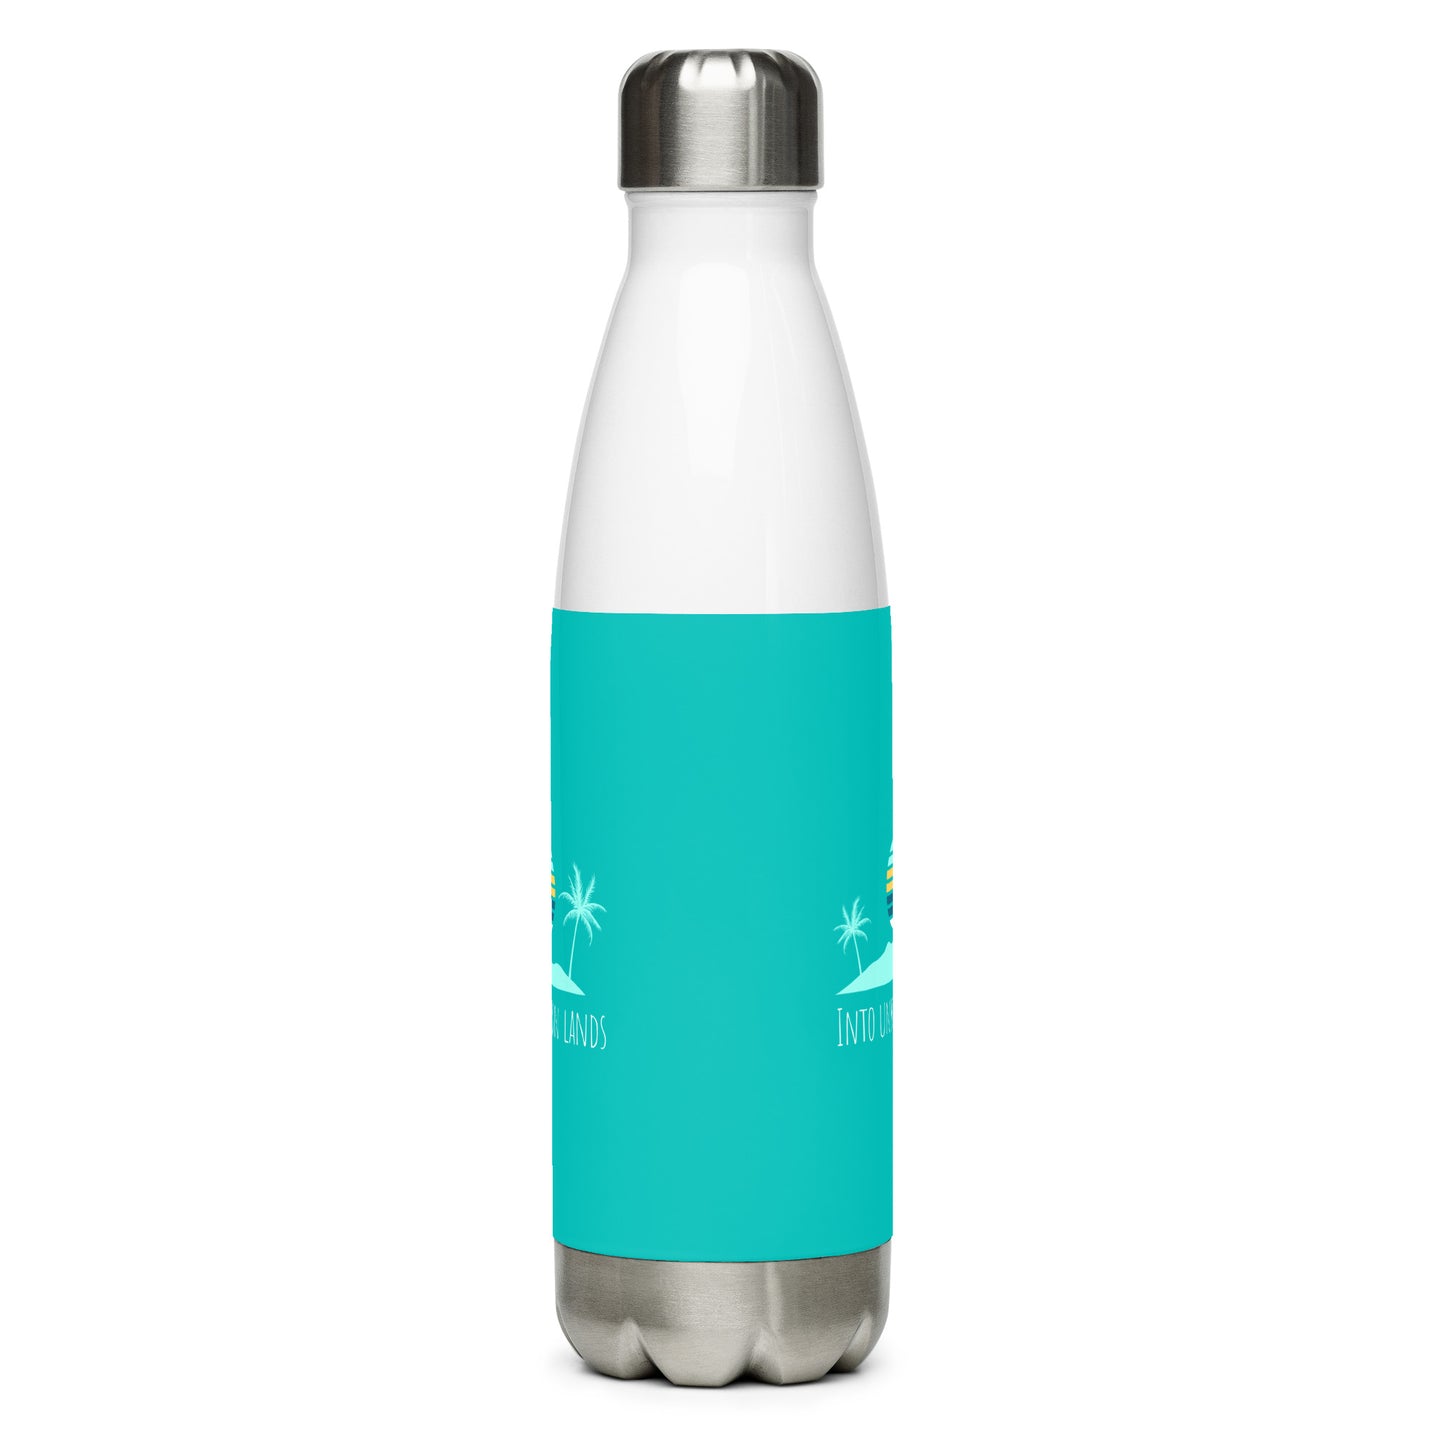 Adventurer's Horizon Stainless Steel Water Bottle